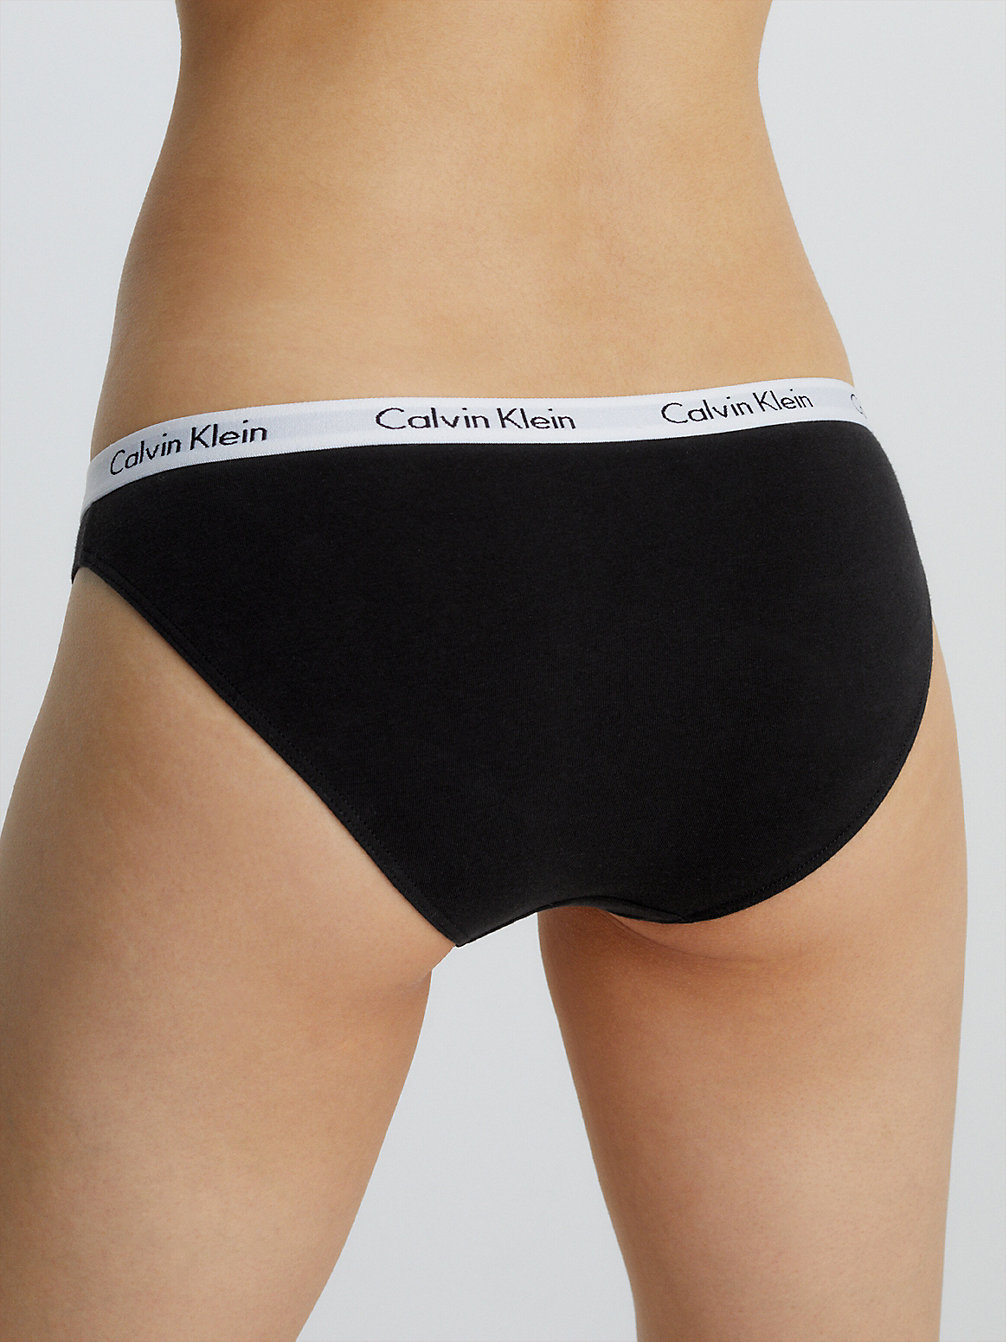 BLACK Slips - Carousel undefined Damen Calvin Klein